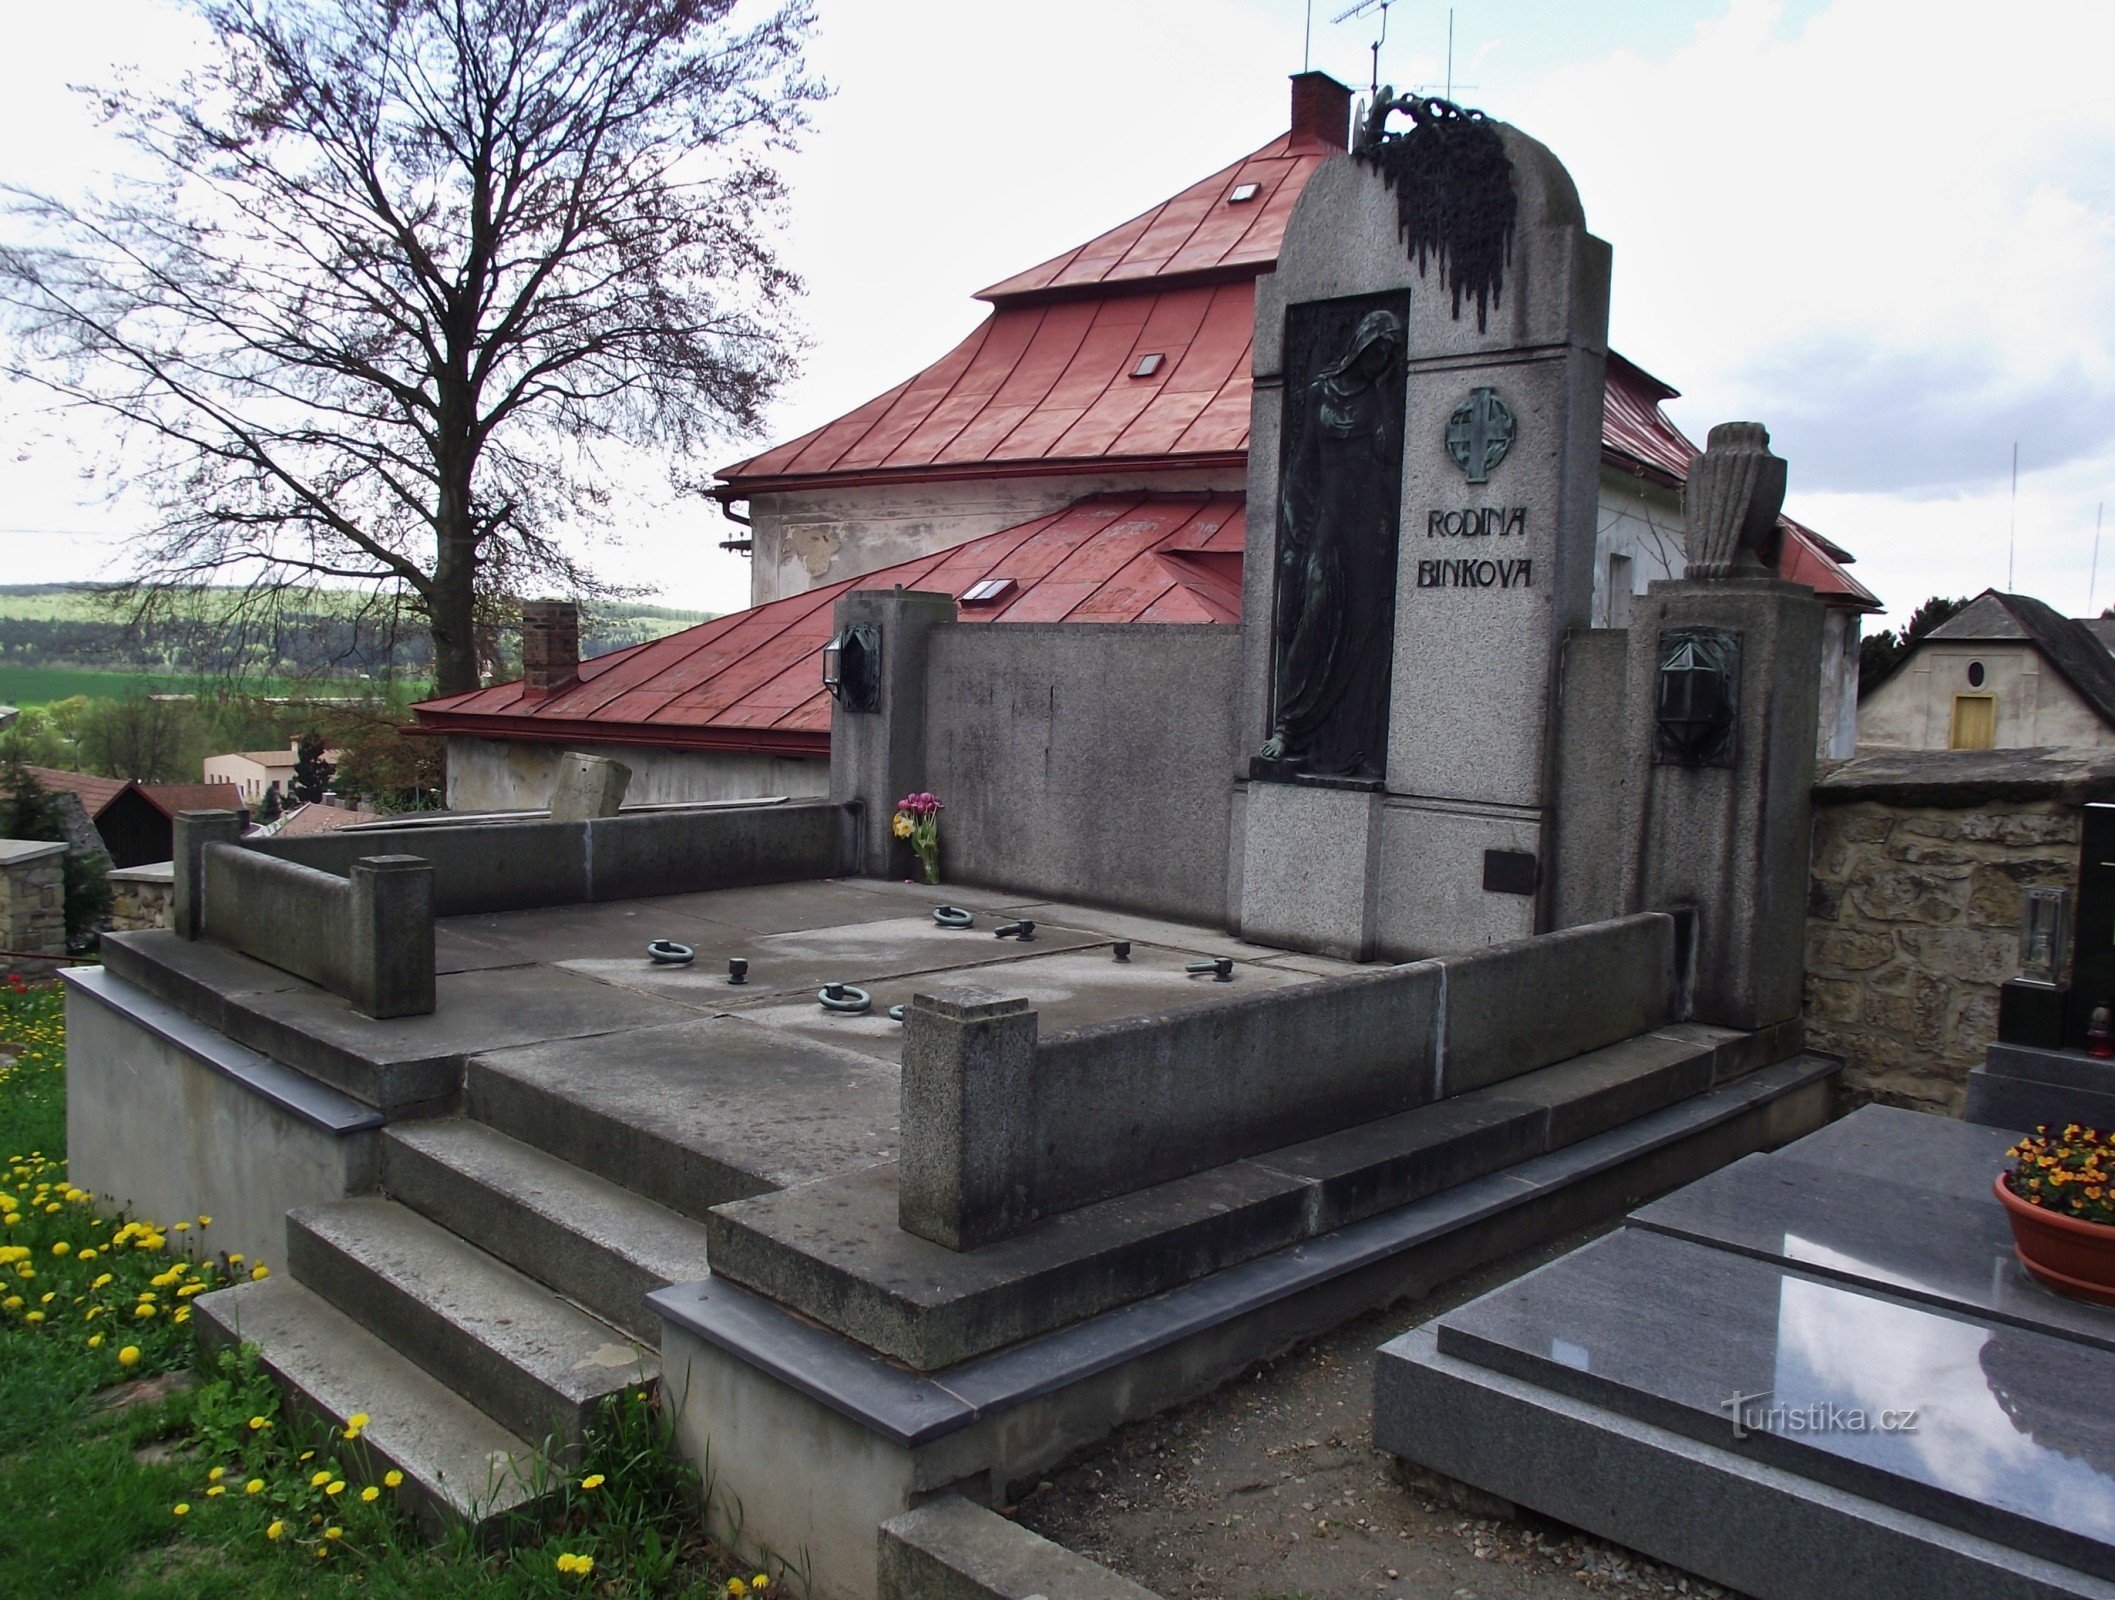 Šturs 在 Binkov 墓和教区长官邸的新艺术风格雕塑